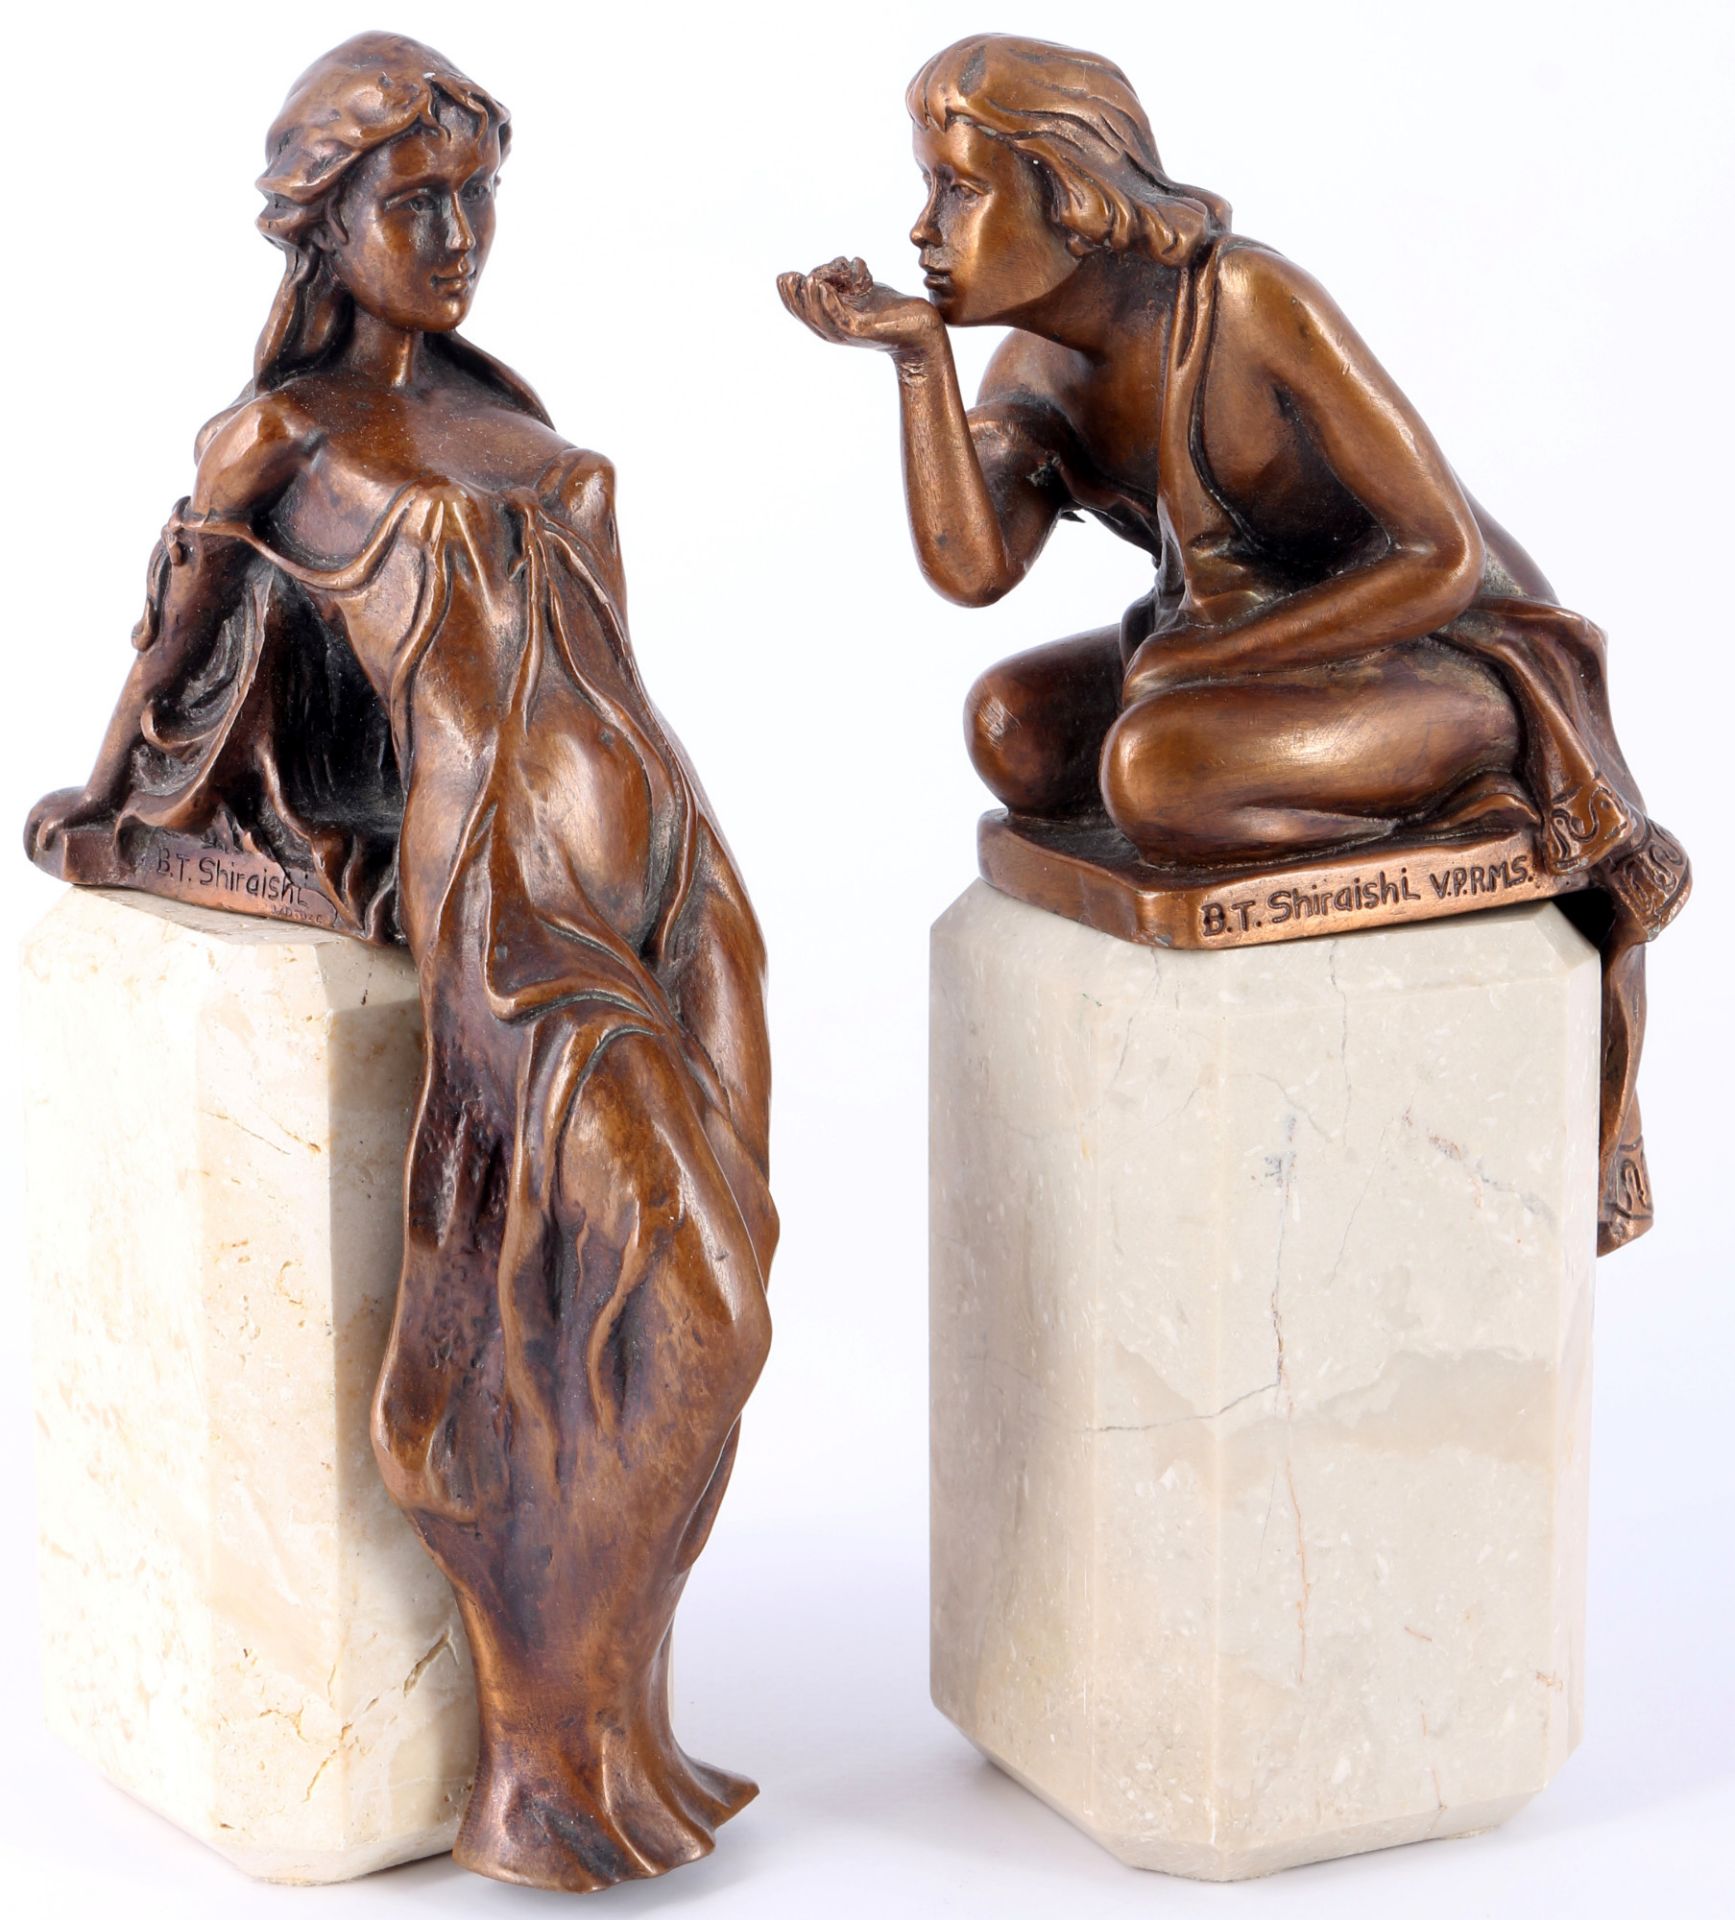 Barry Shiraishi (*1938) 2 Bronzen Les beaux arts Romeo und Julia, bronze Romeo and Juliet,